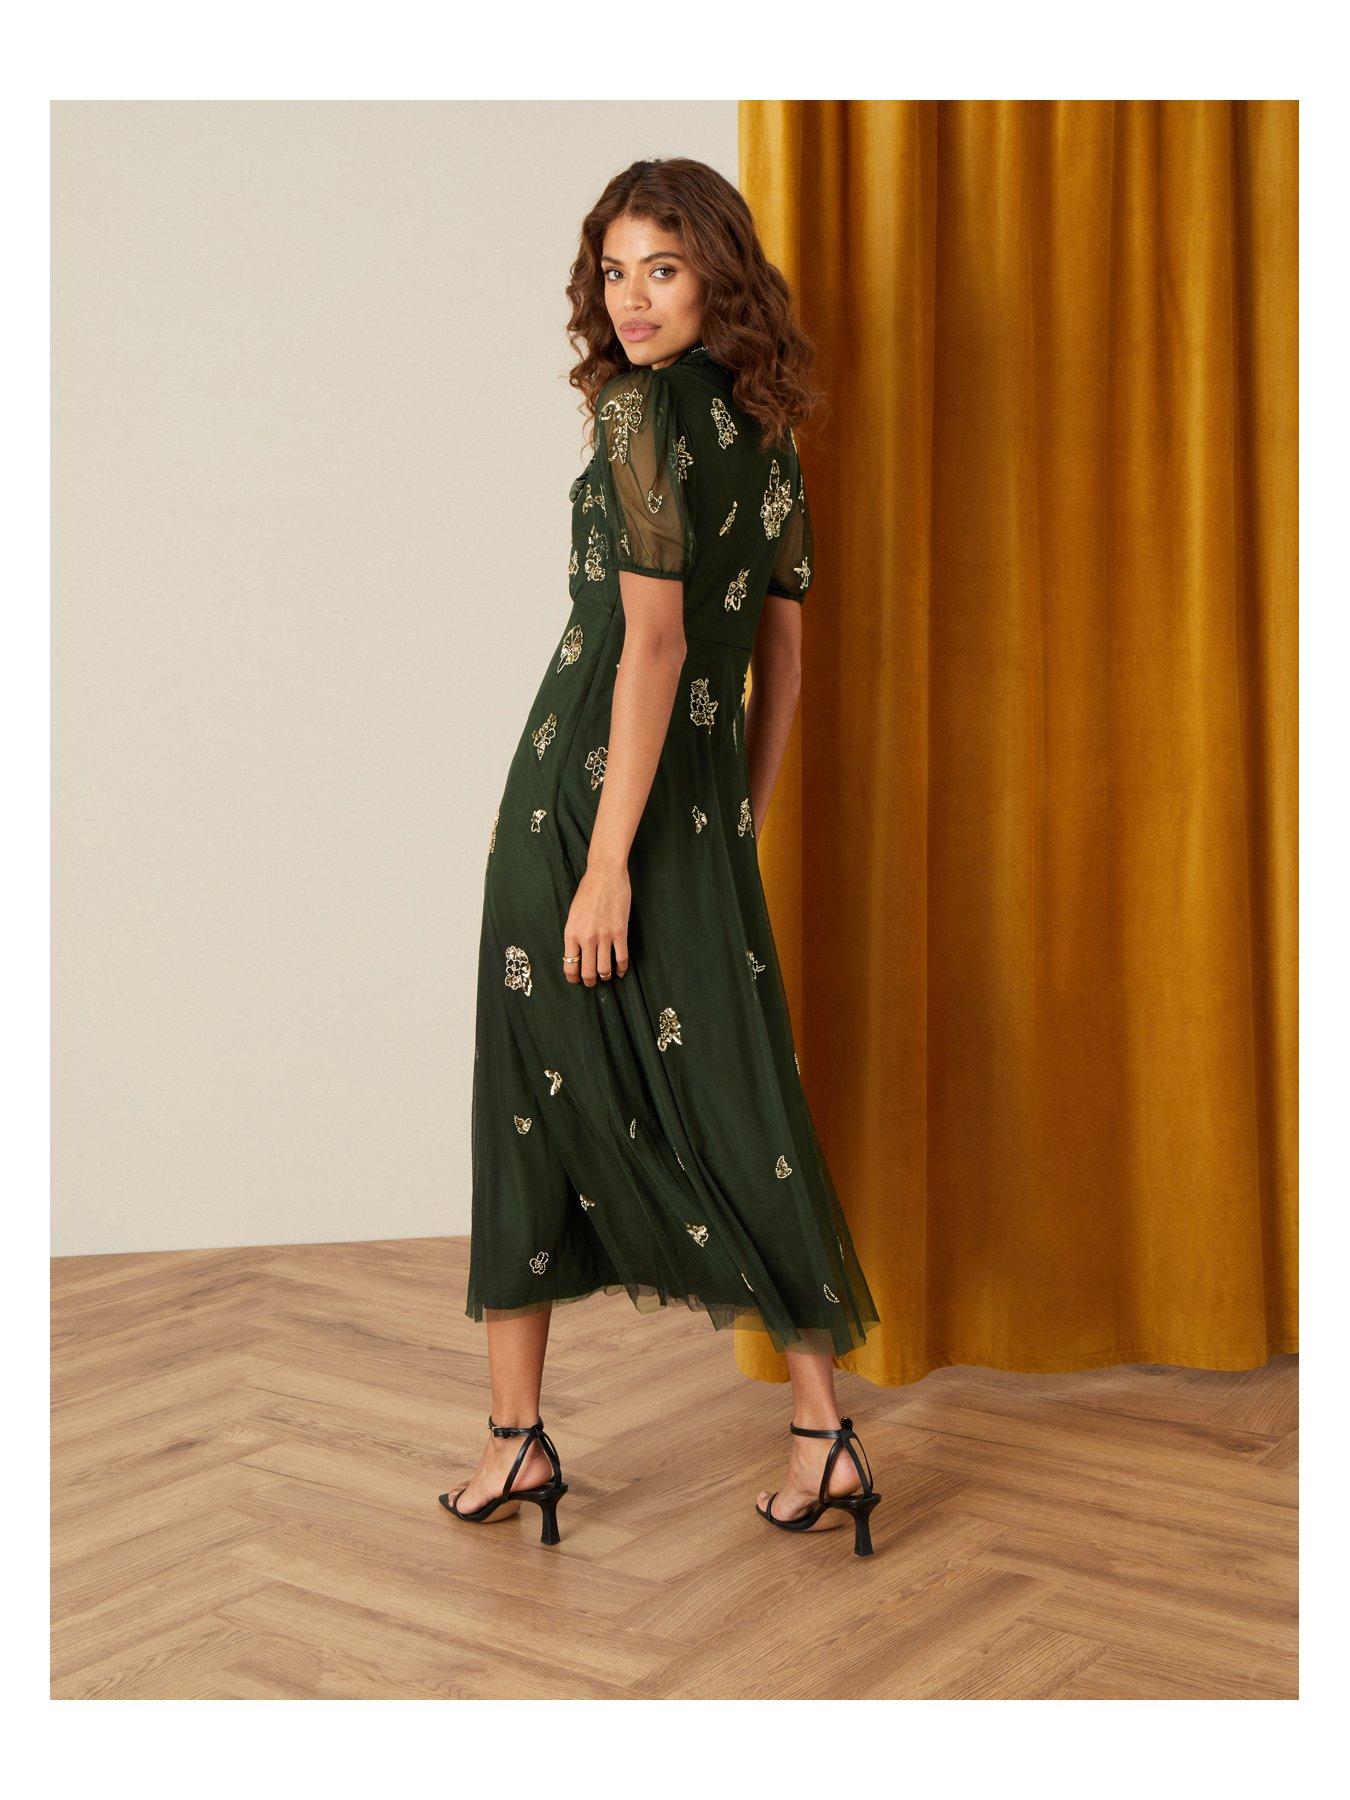  Lauren Sustainable Embellished Midi Dress - Olive